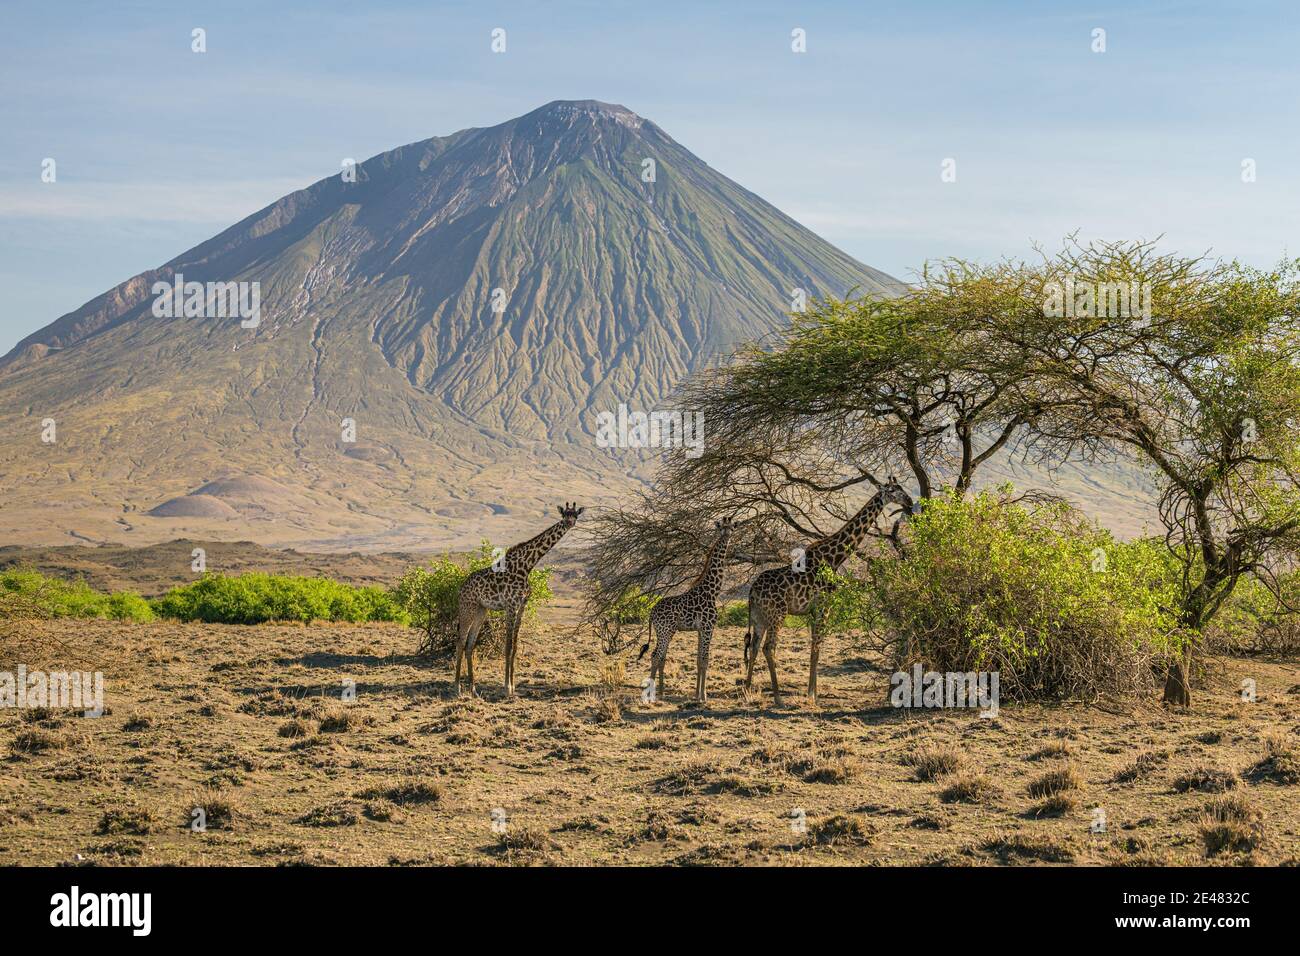 Three giraffes eating from a tree, Lake Natron Area, Tanzania Stock Photo